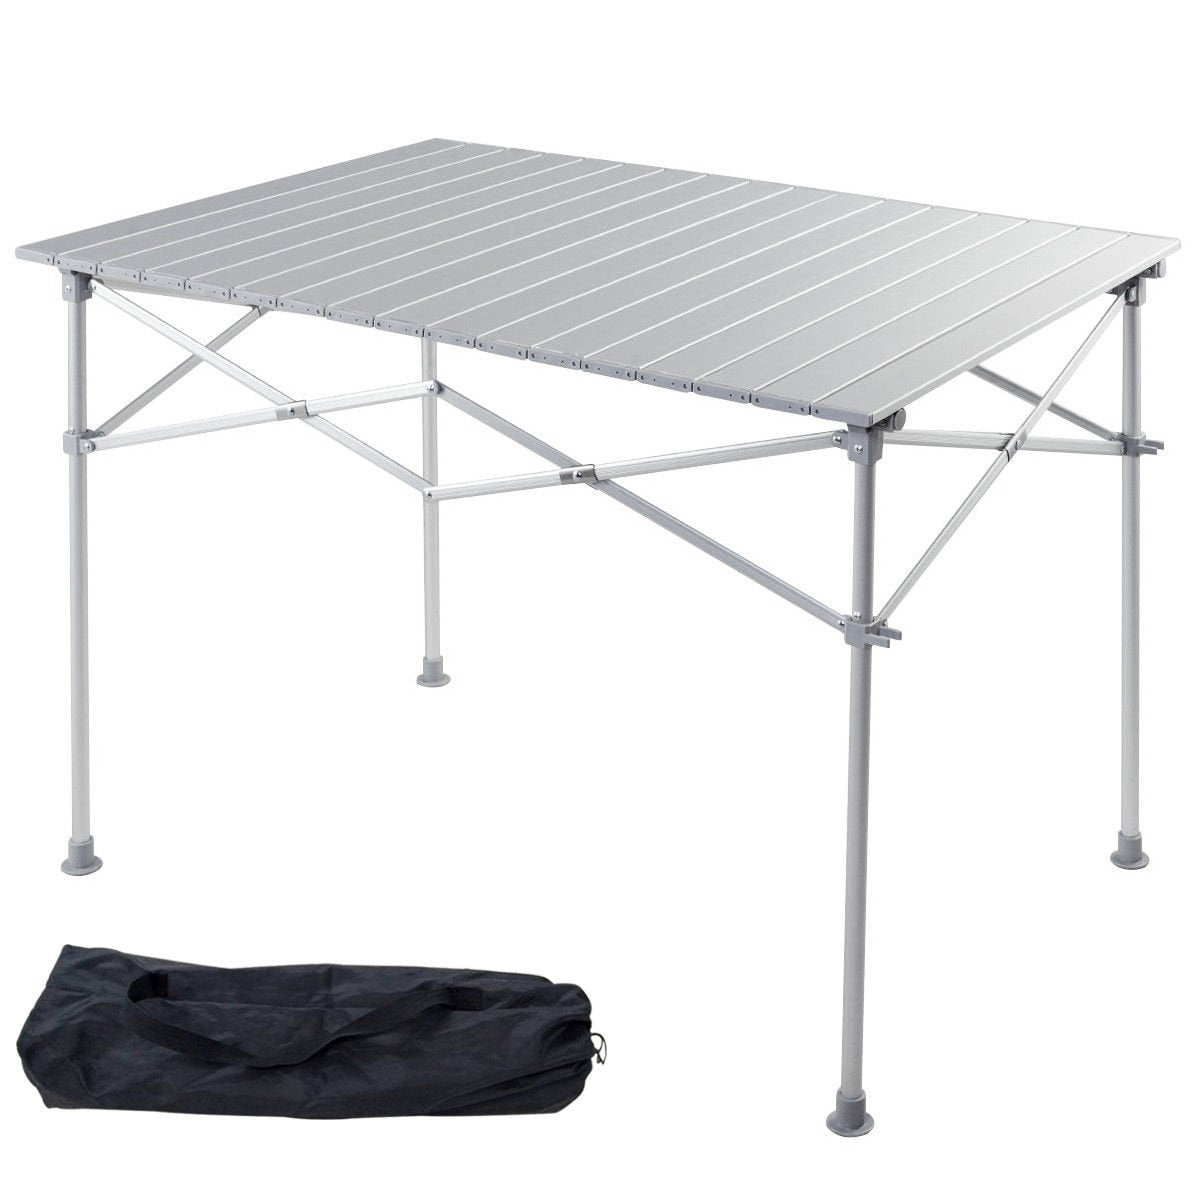 Giantex Portable Camping Table Aluminum Folding Table